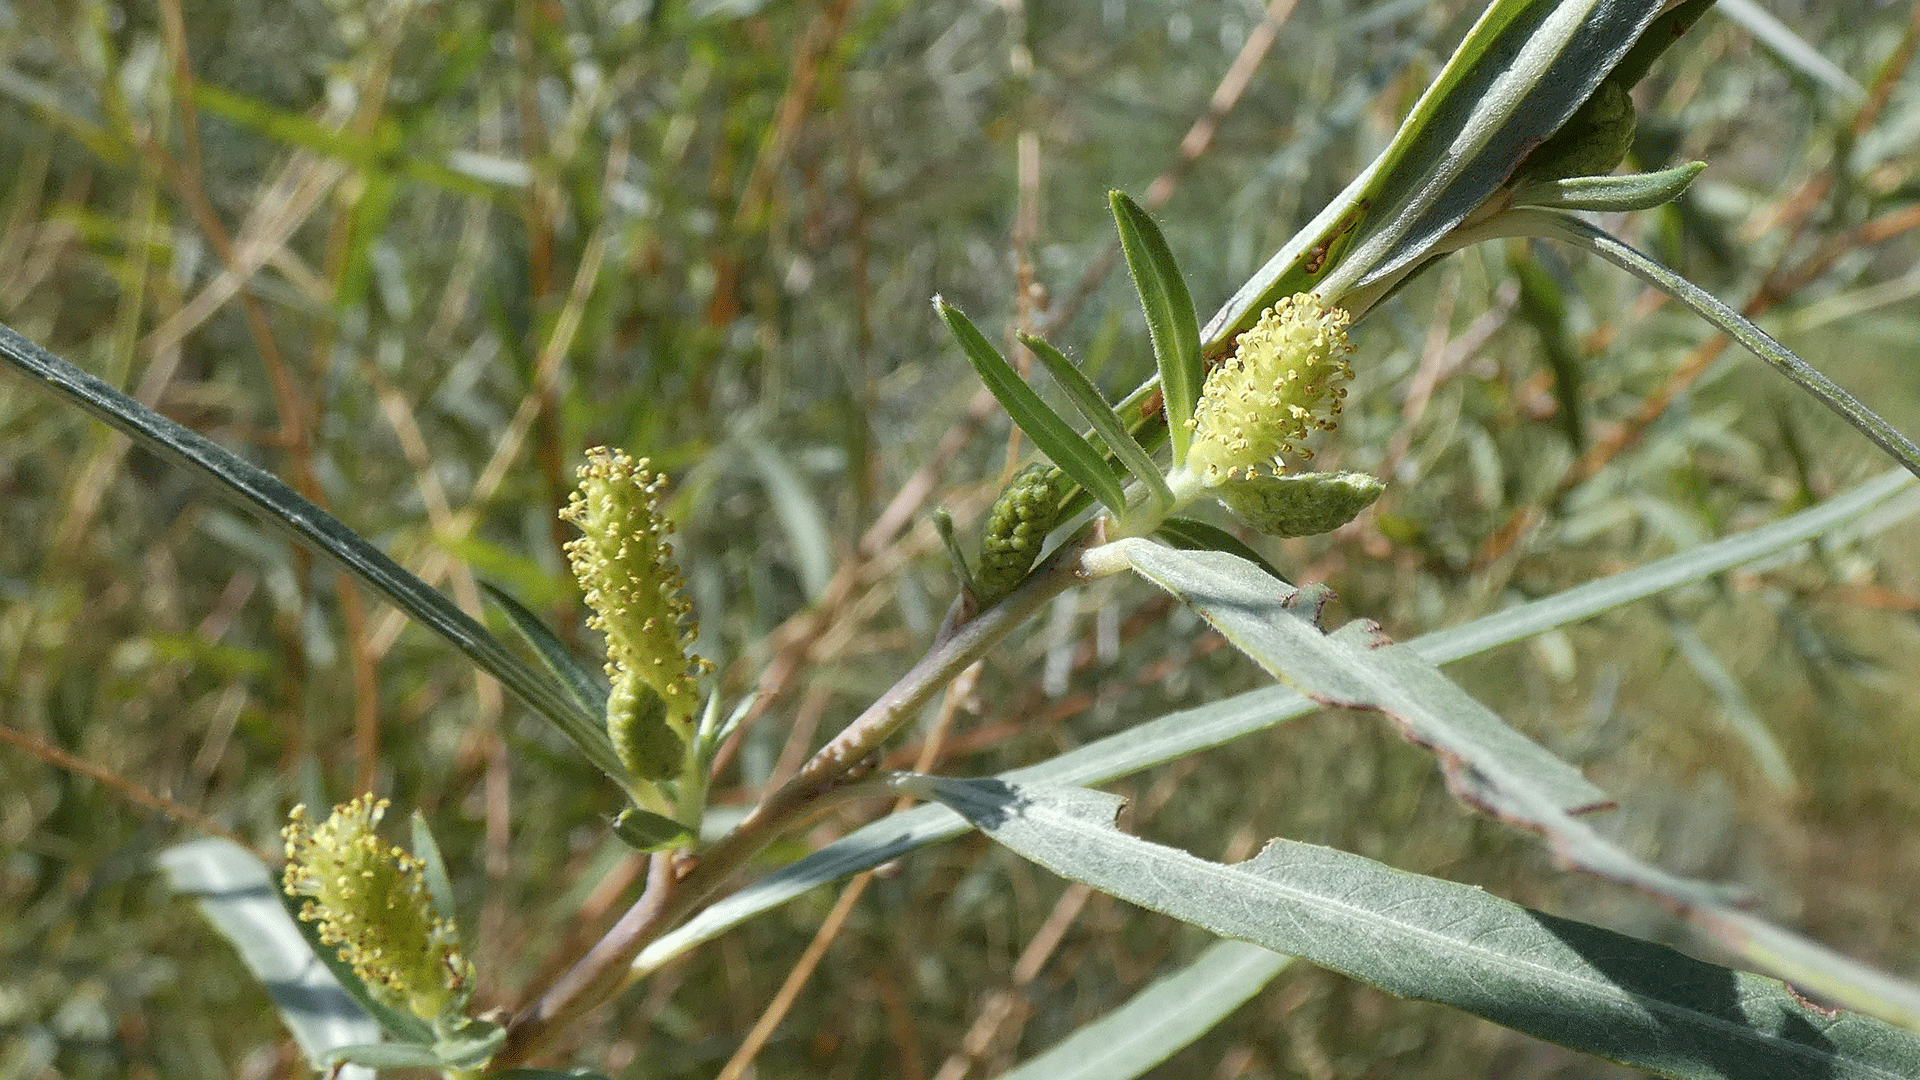 Narrow-leaf willow (I think), Rio Grande Bosque, Albuquerque, August 2020